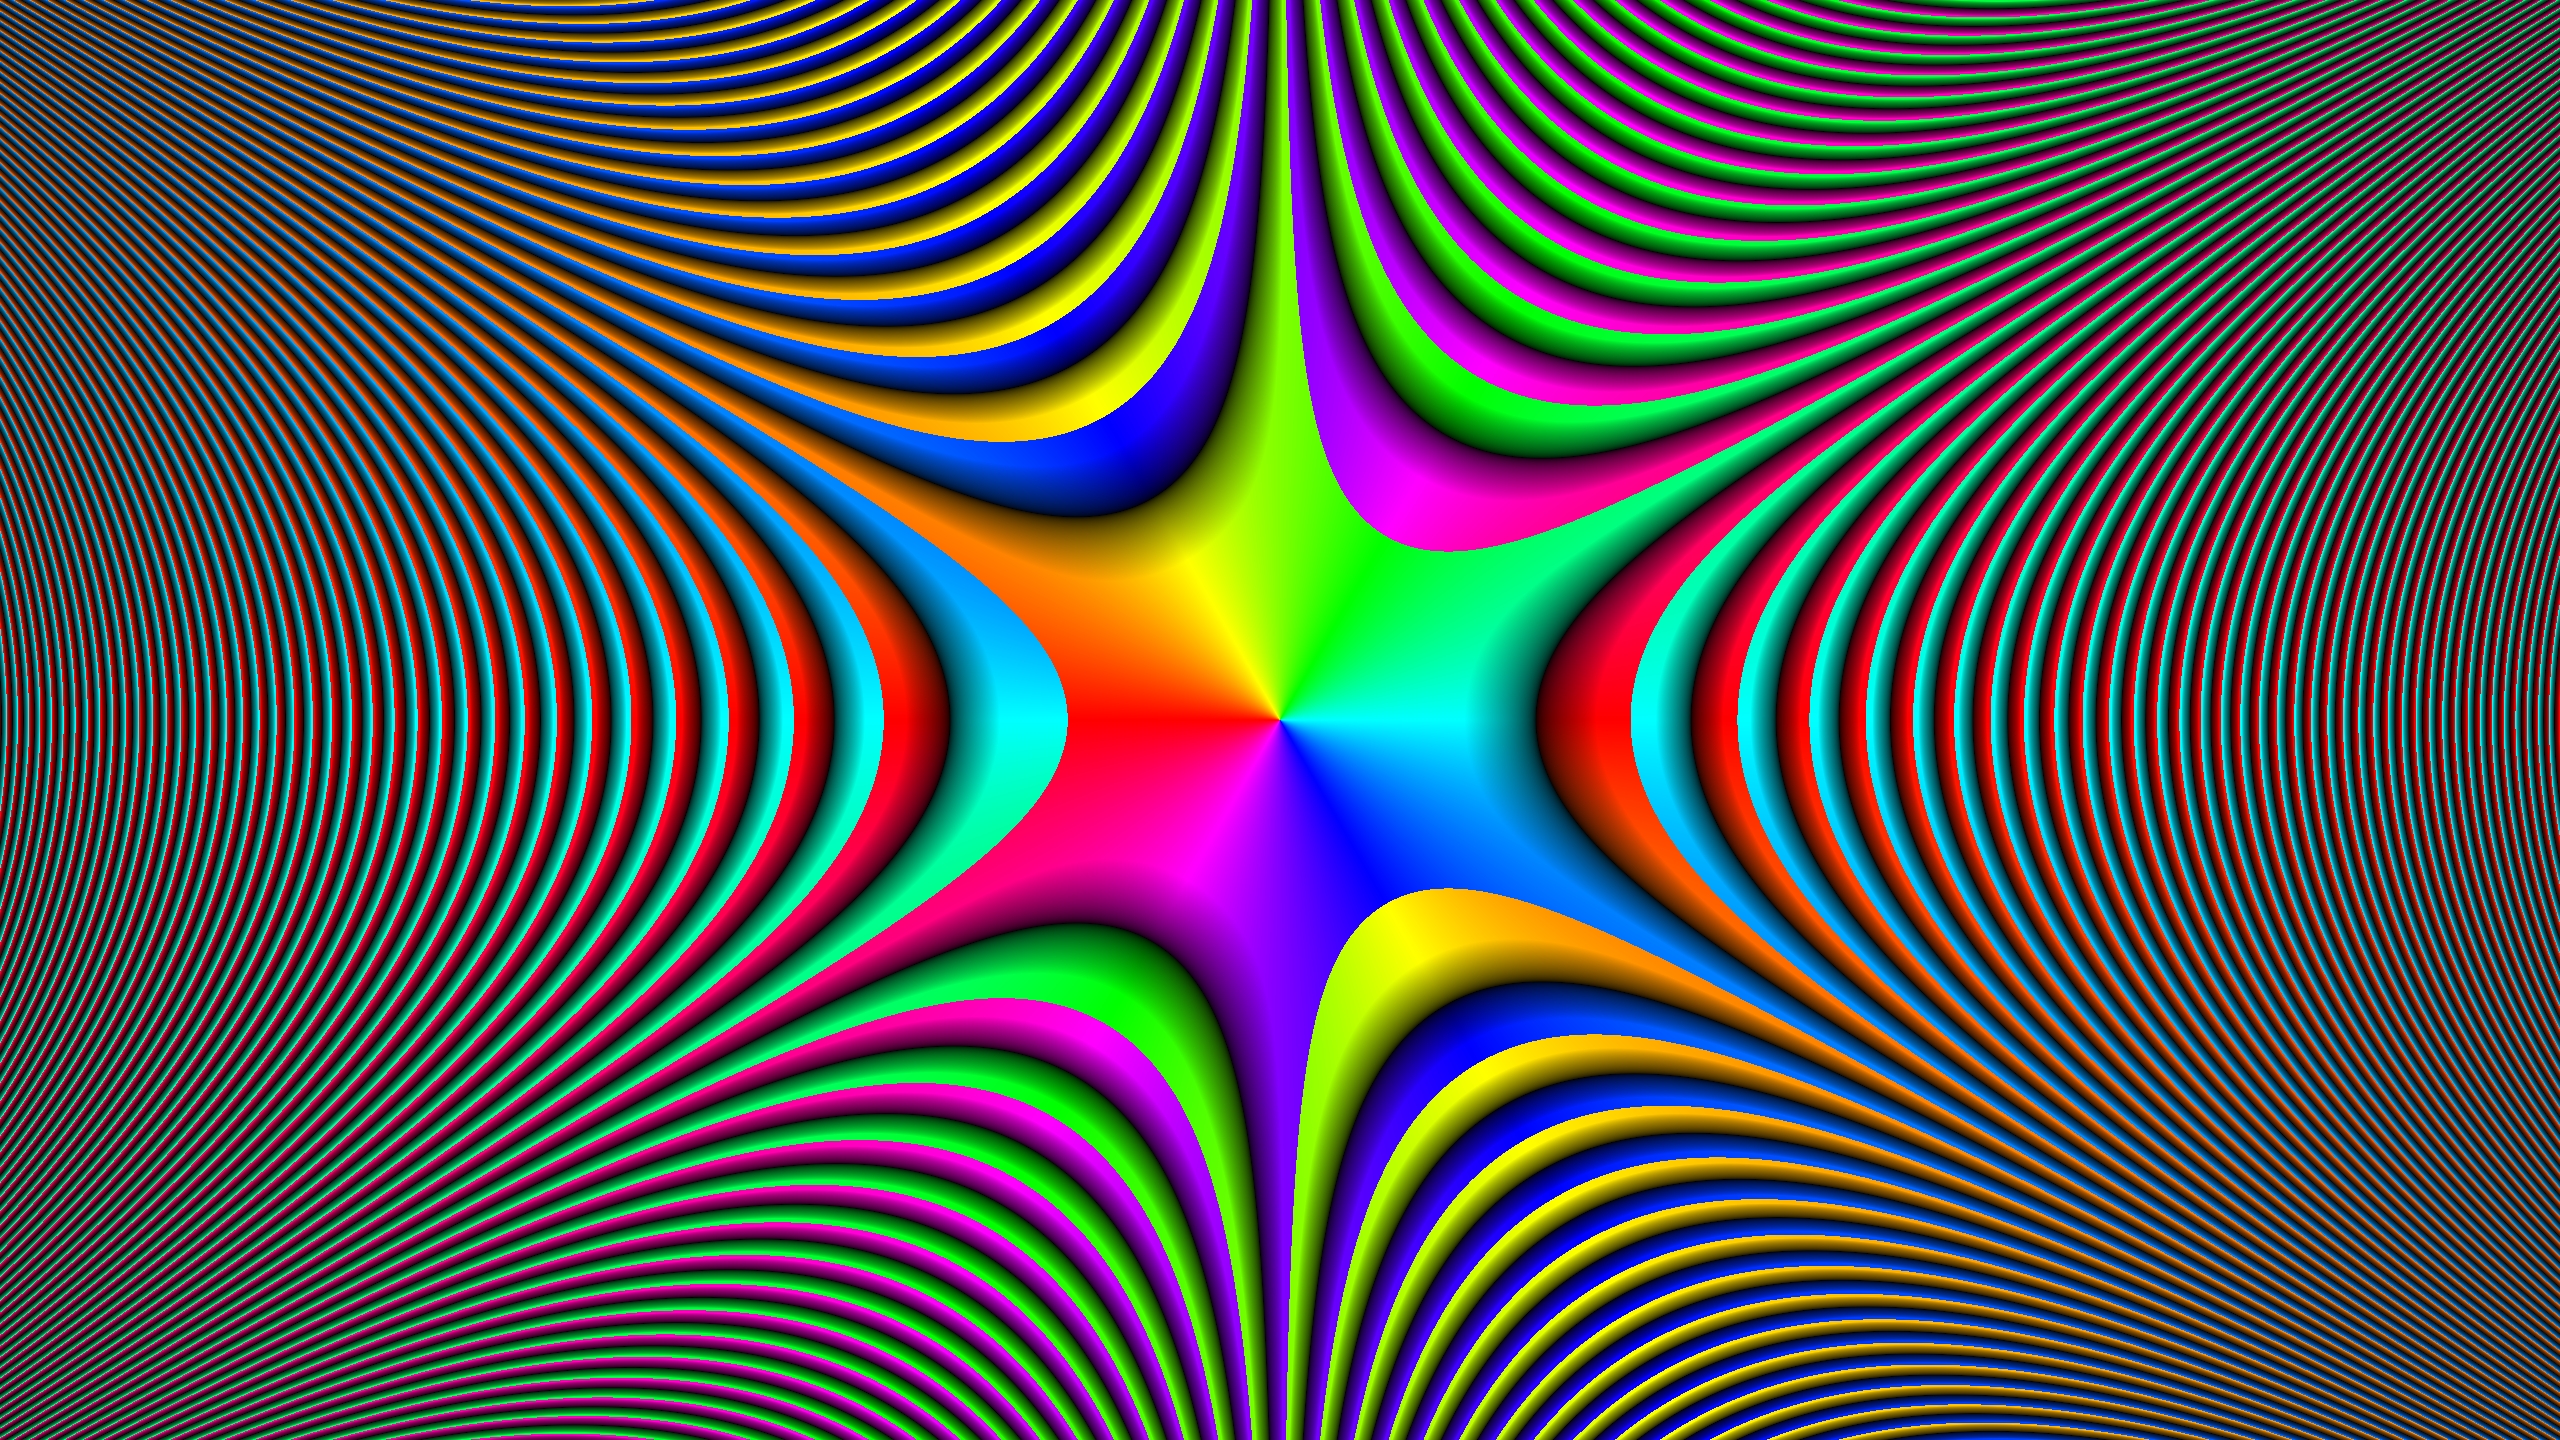 Moving Illusion Wallpaper Hd - HD Wallpaper 